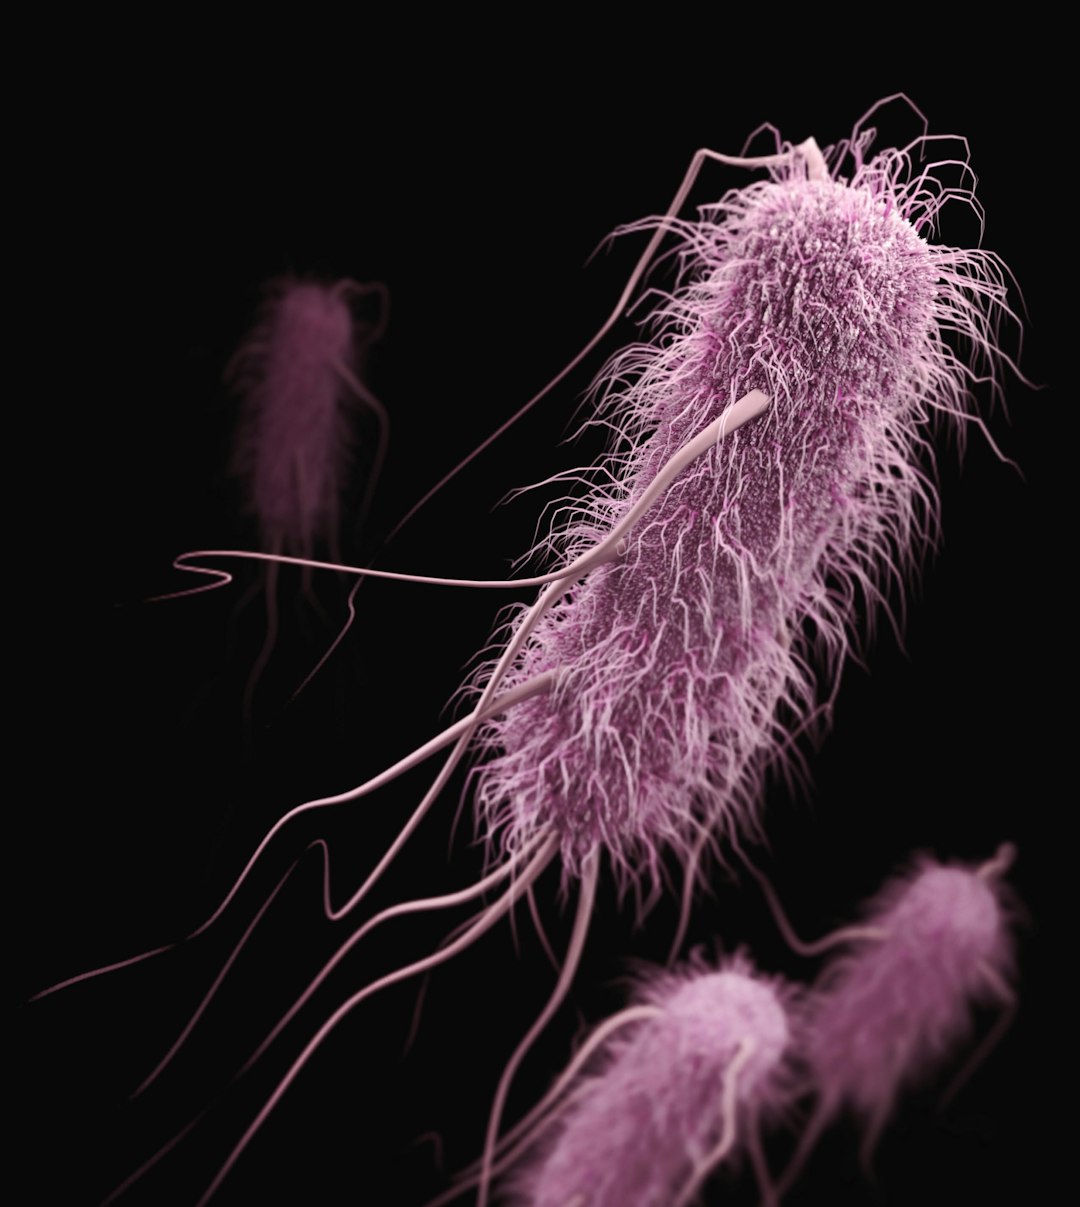 Extended-spectrum ß-lactamase-producing (ESBLs) Enterobacteriaceae bacteria: Escherichia coli